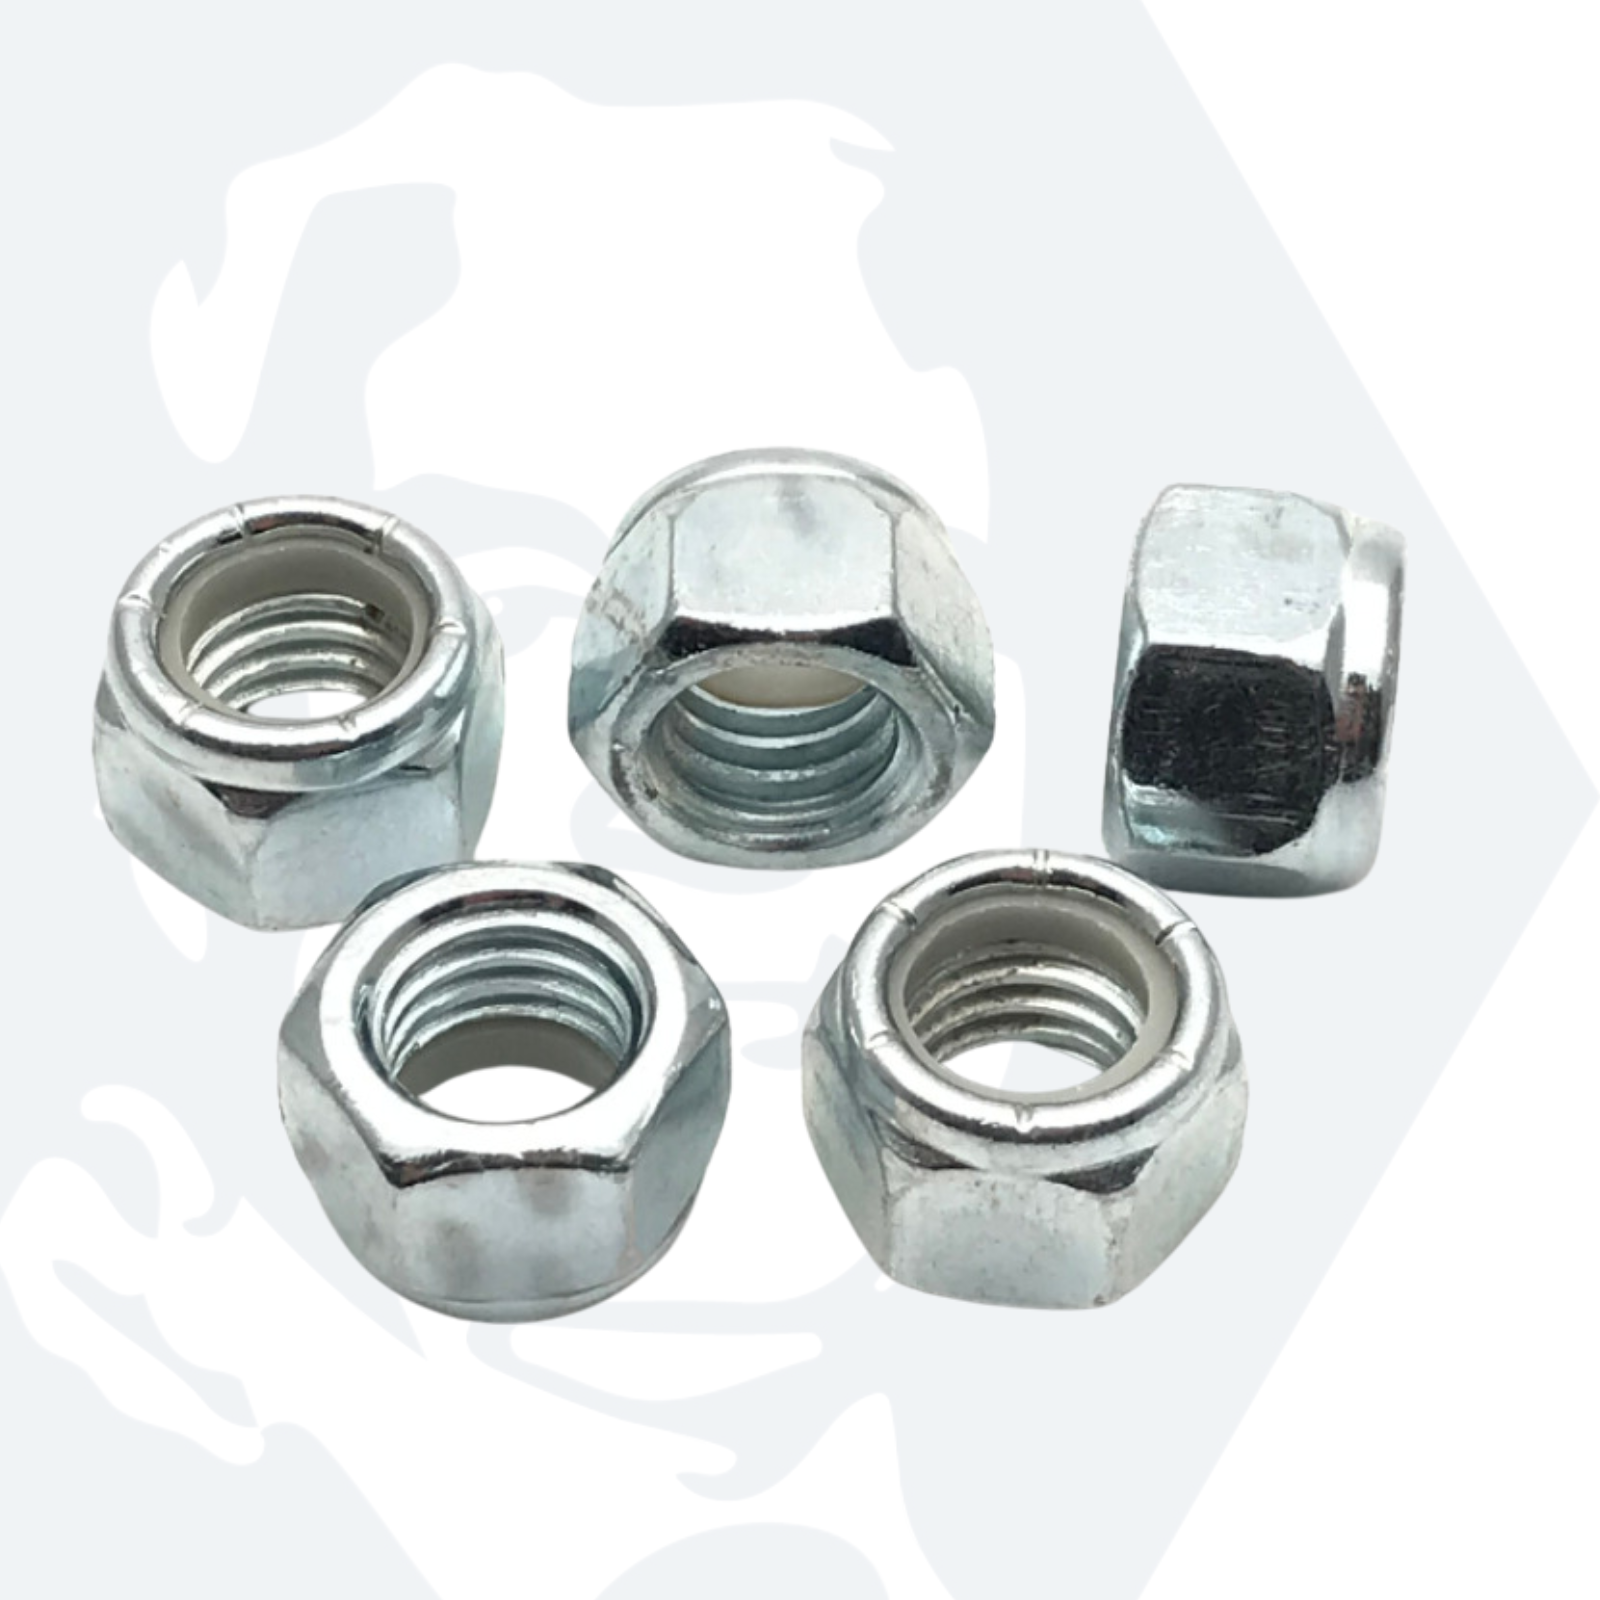 #10 UNF Hexagon Nylon Locking Nuts - Zinc Plated Steel